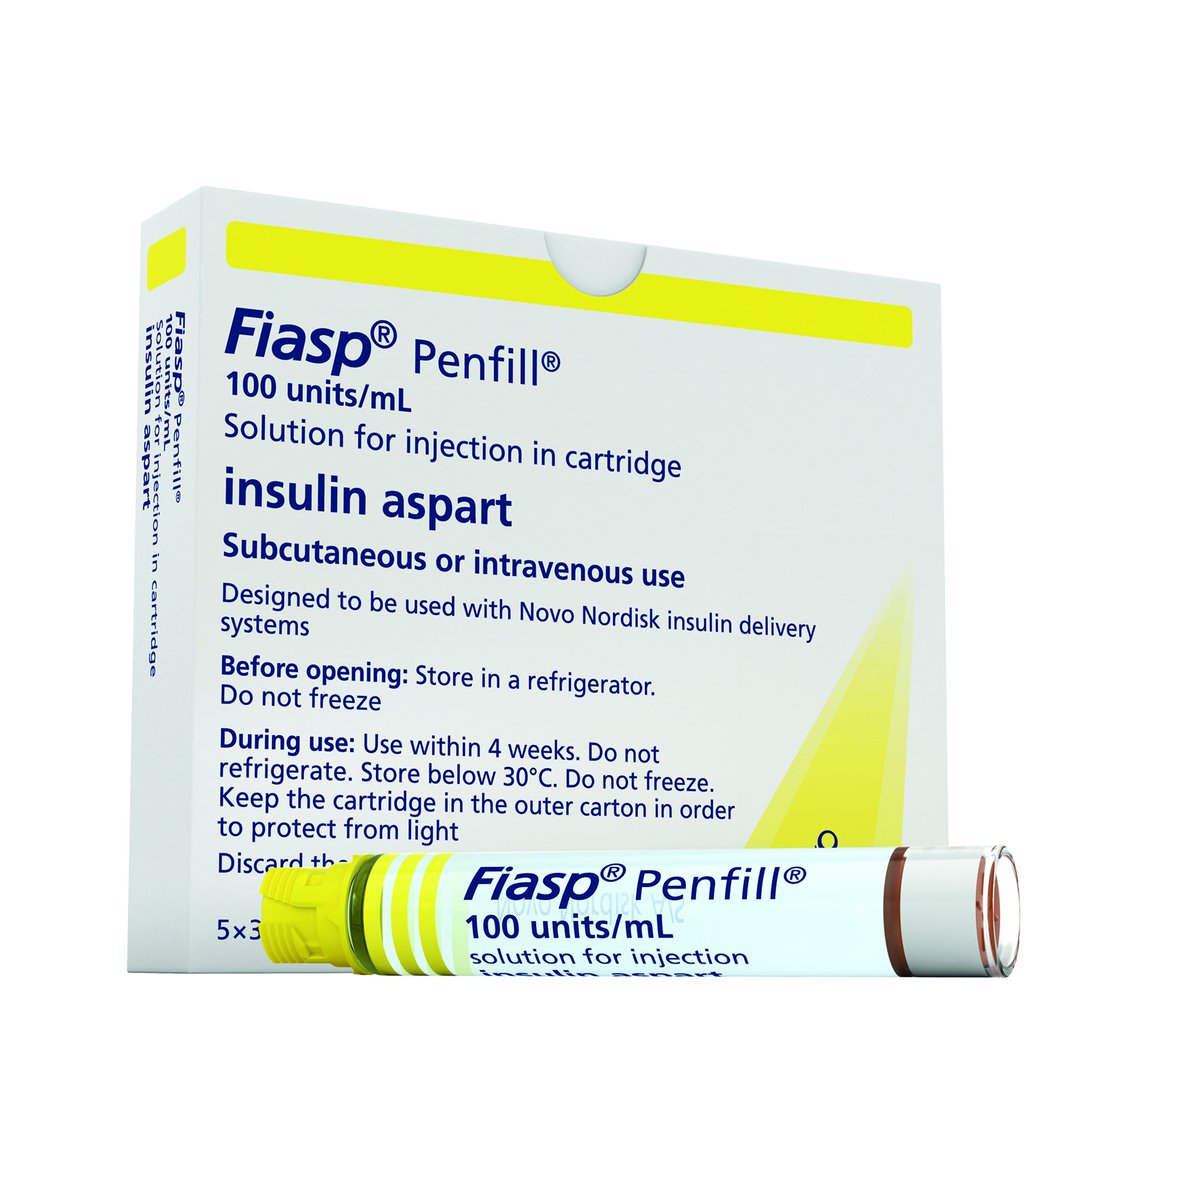 Brands or types of insulin novolog flexpen